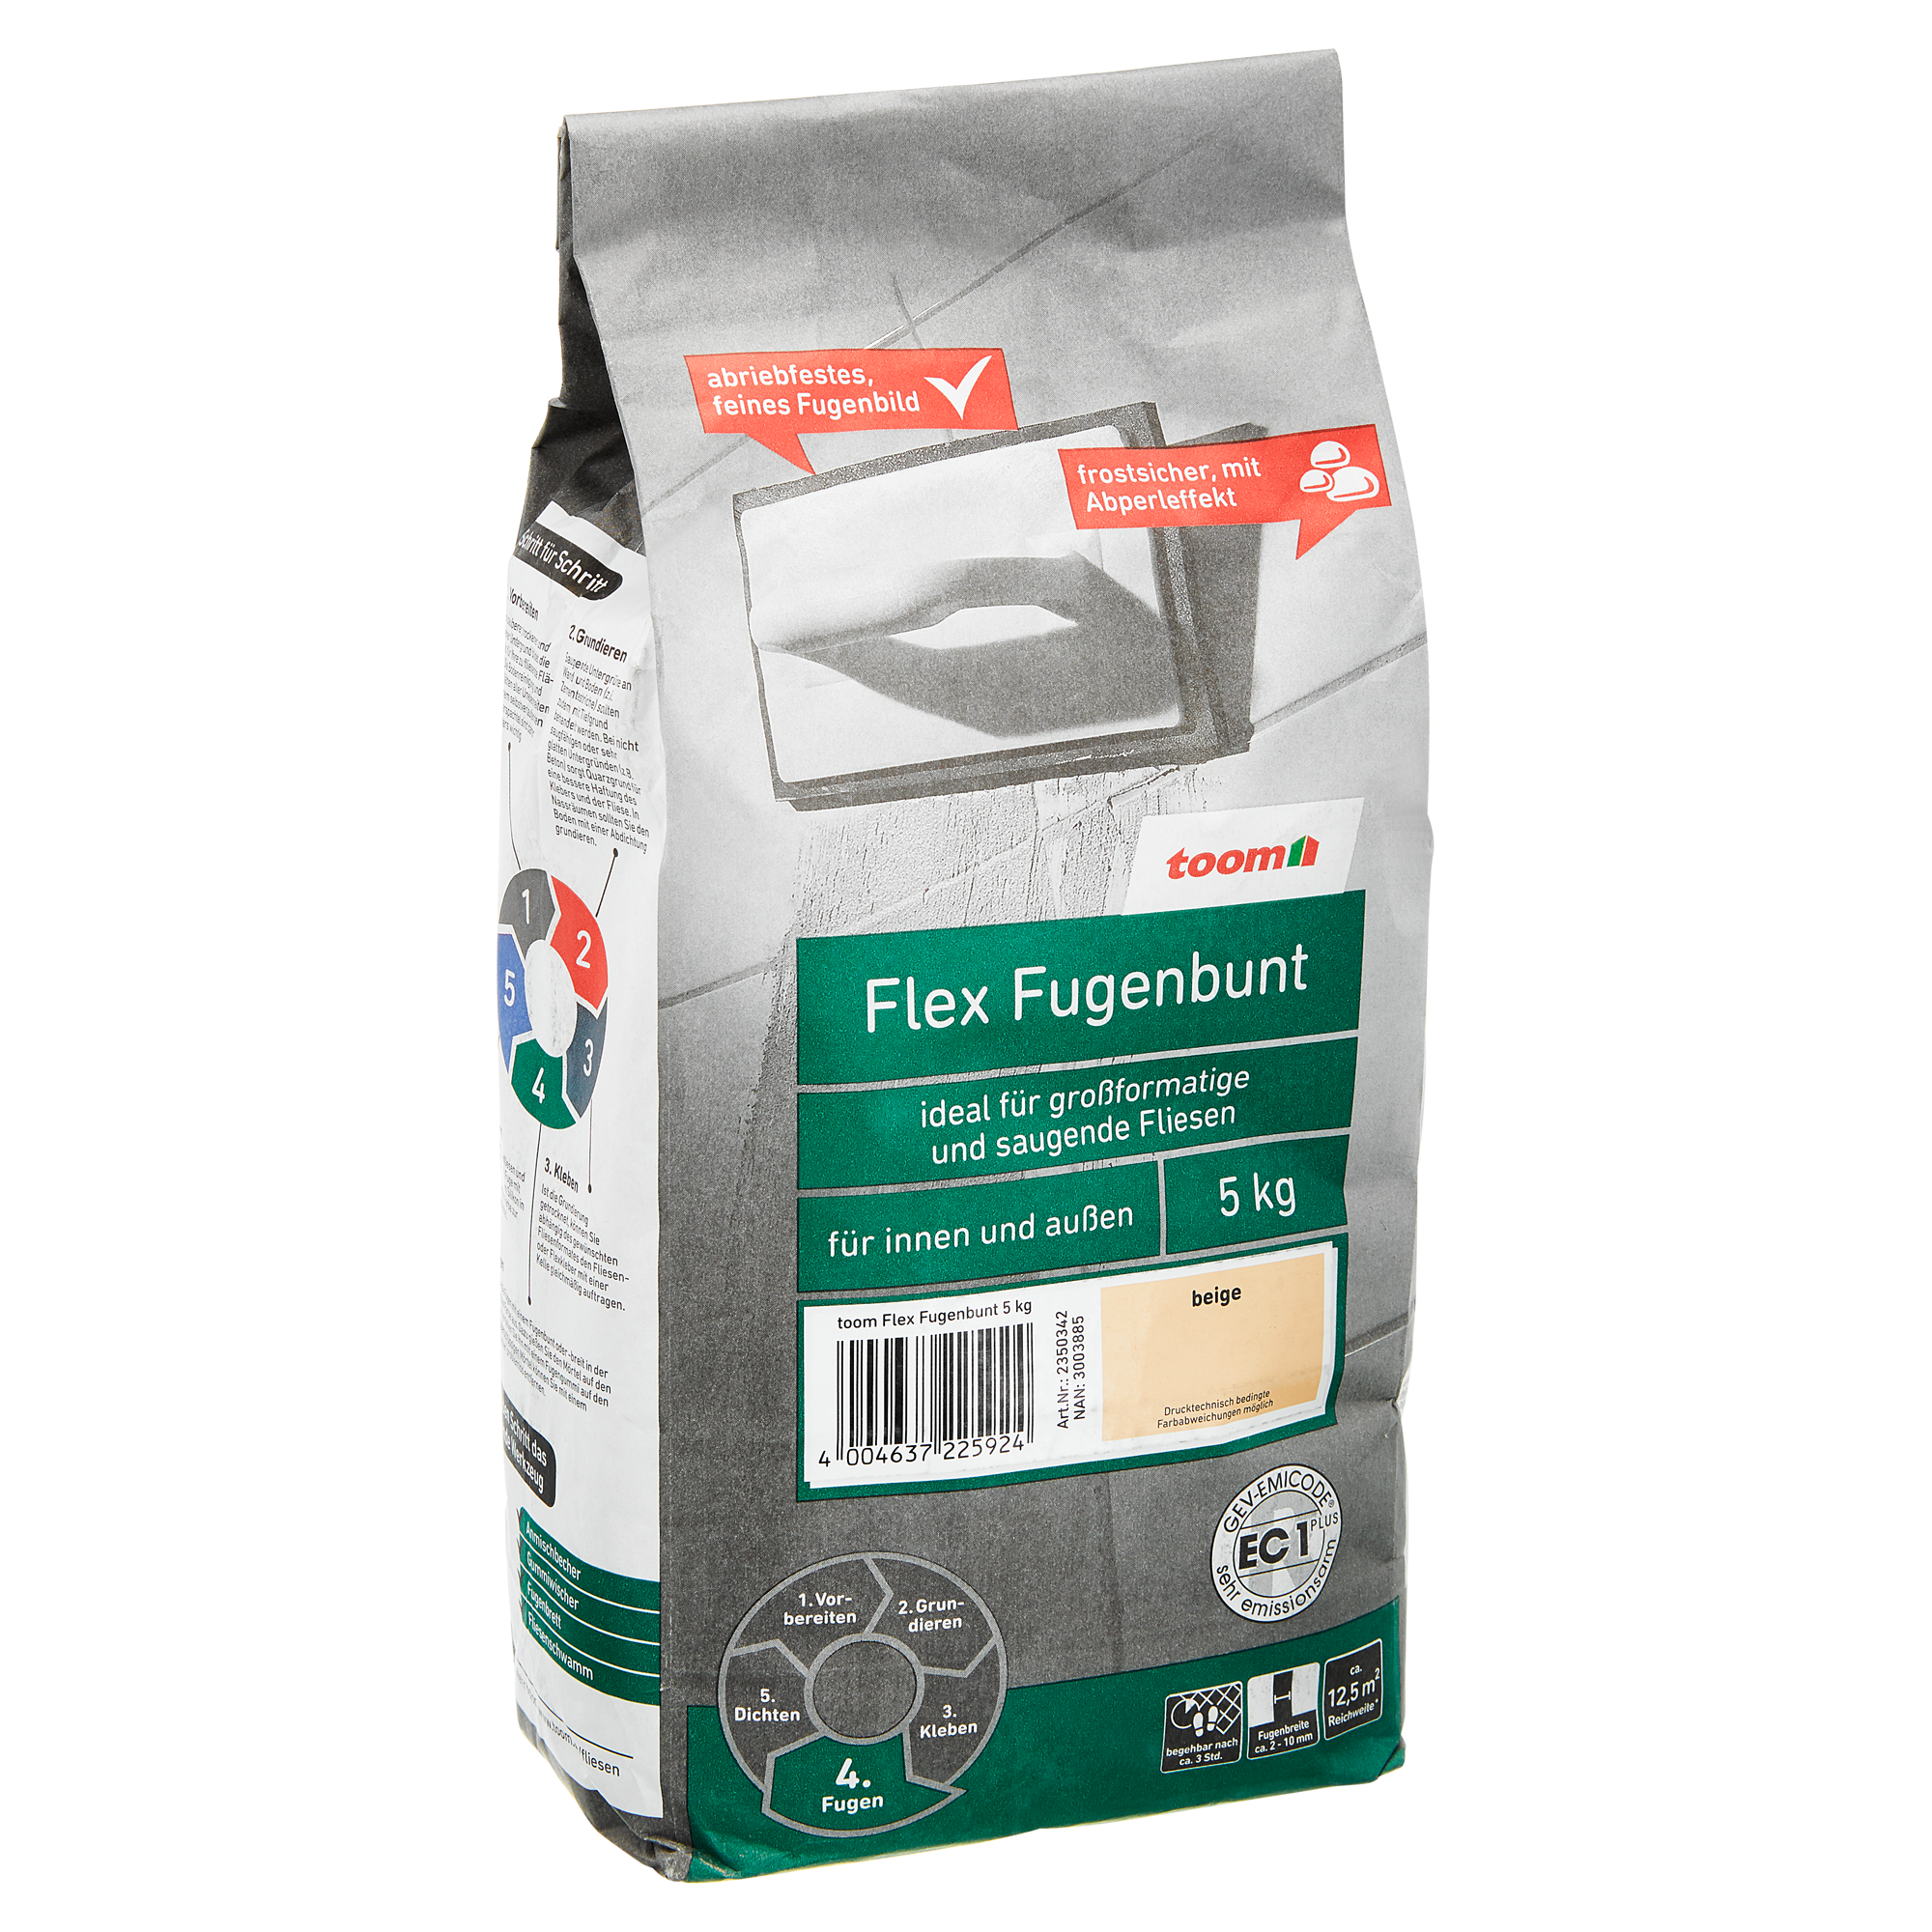 Flex Fugenbunt beige 5 kg + product picture